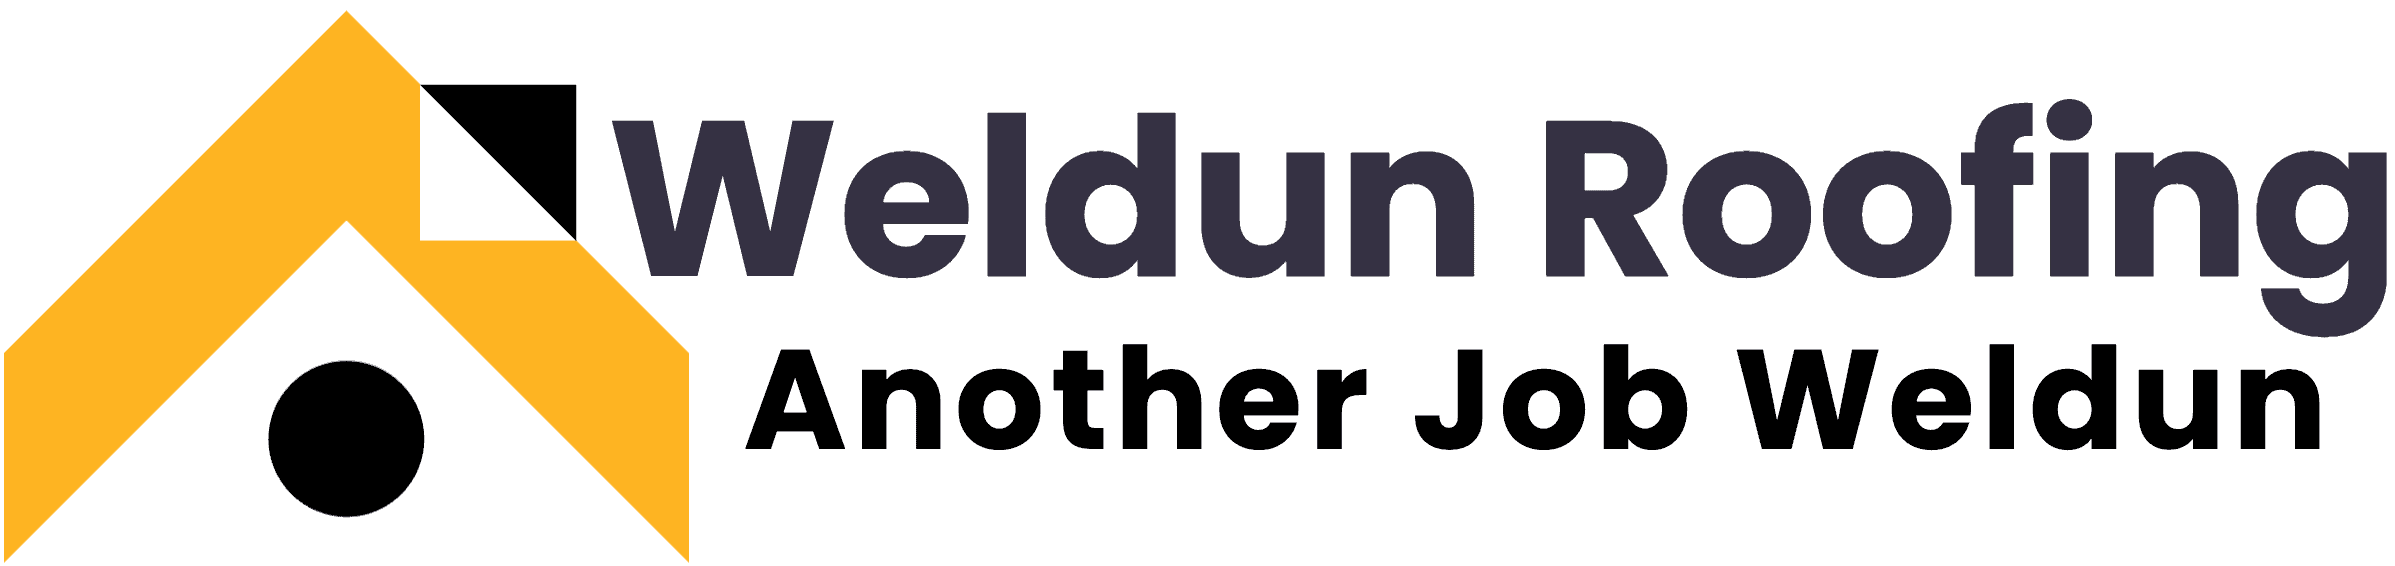 Weldun Roofing logo with slogan "Another Job Weldun